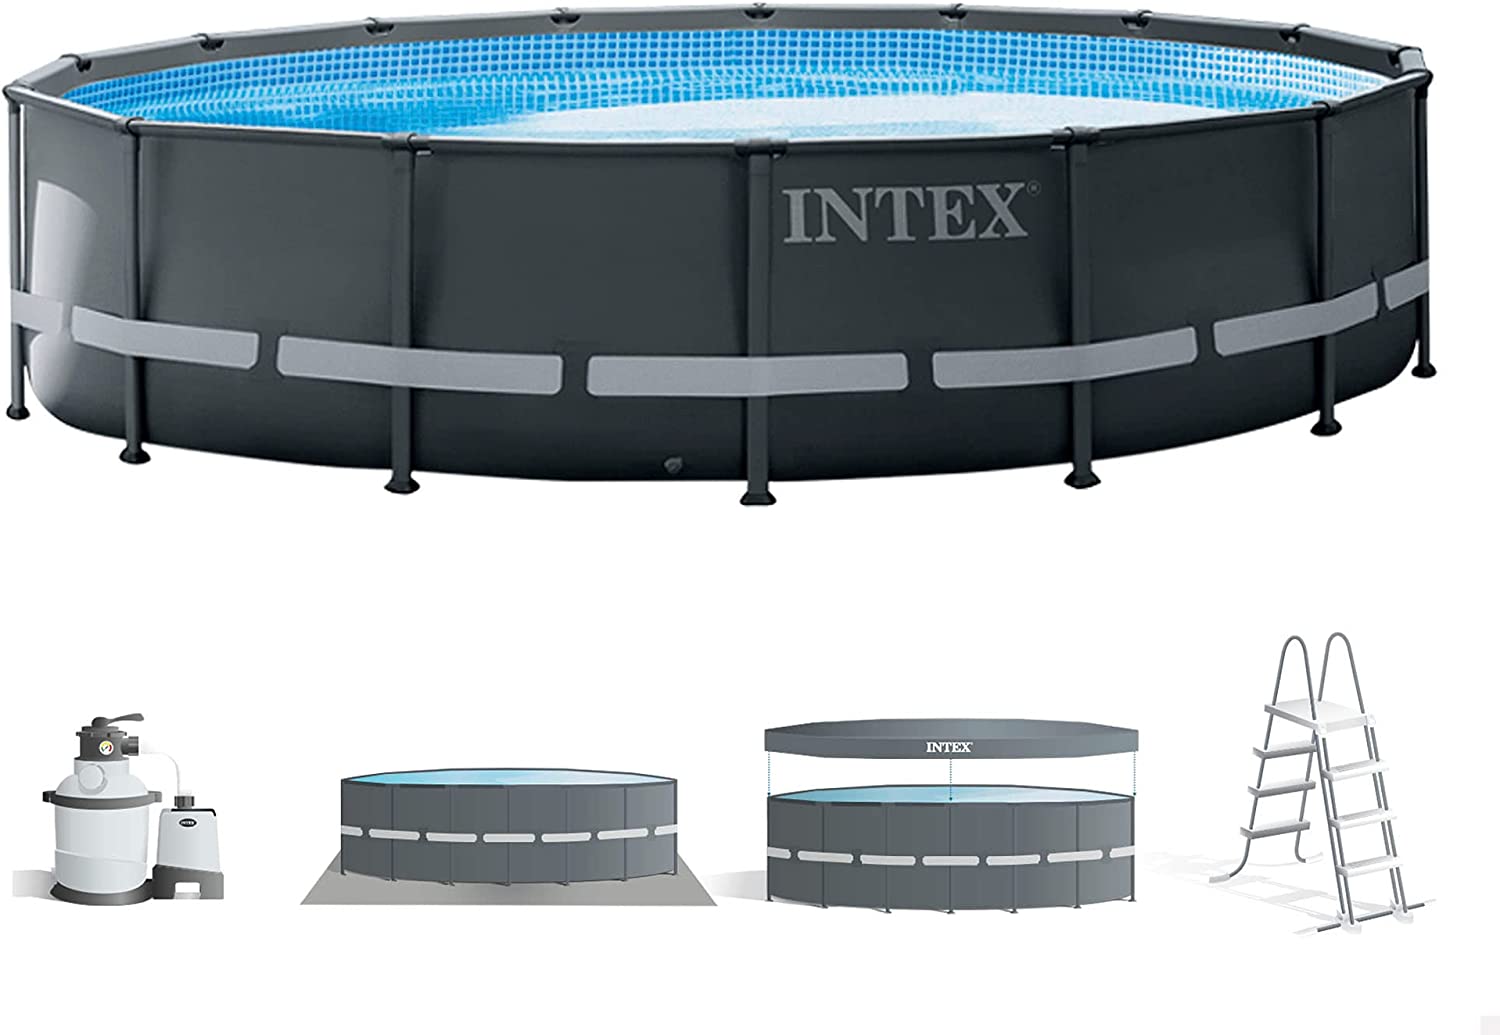 Bon plan : la piscine tubulaire Intex Ultra XTR © Amazon